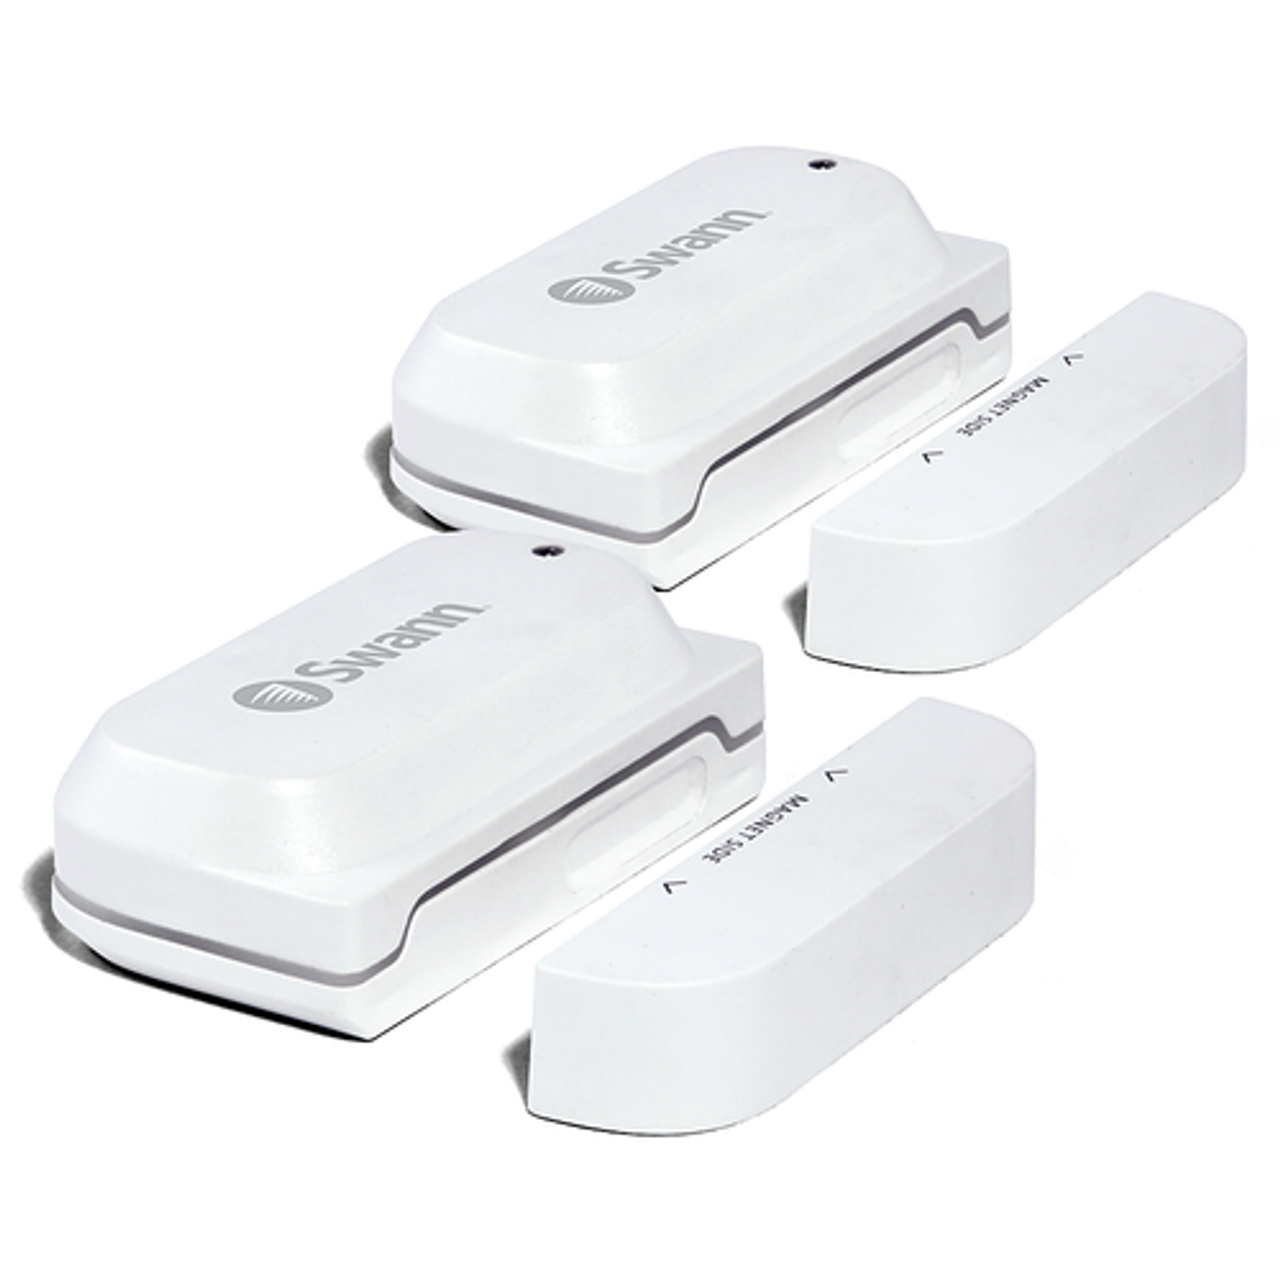 Swann - Window & Door Alert Sensor - Wireless Wi-Fi Connected (2-pack) - White